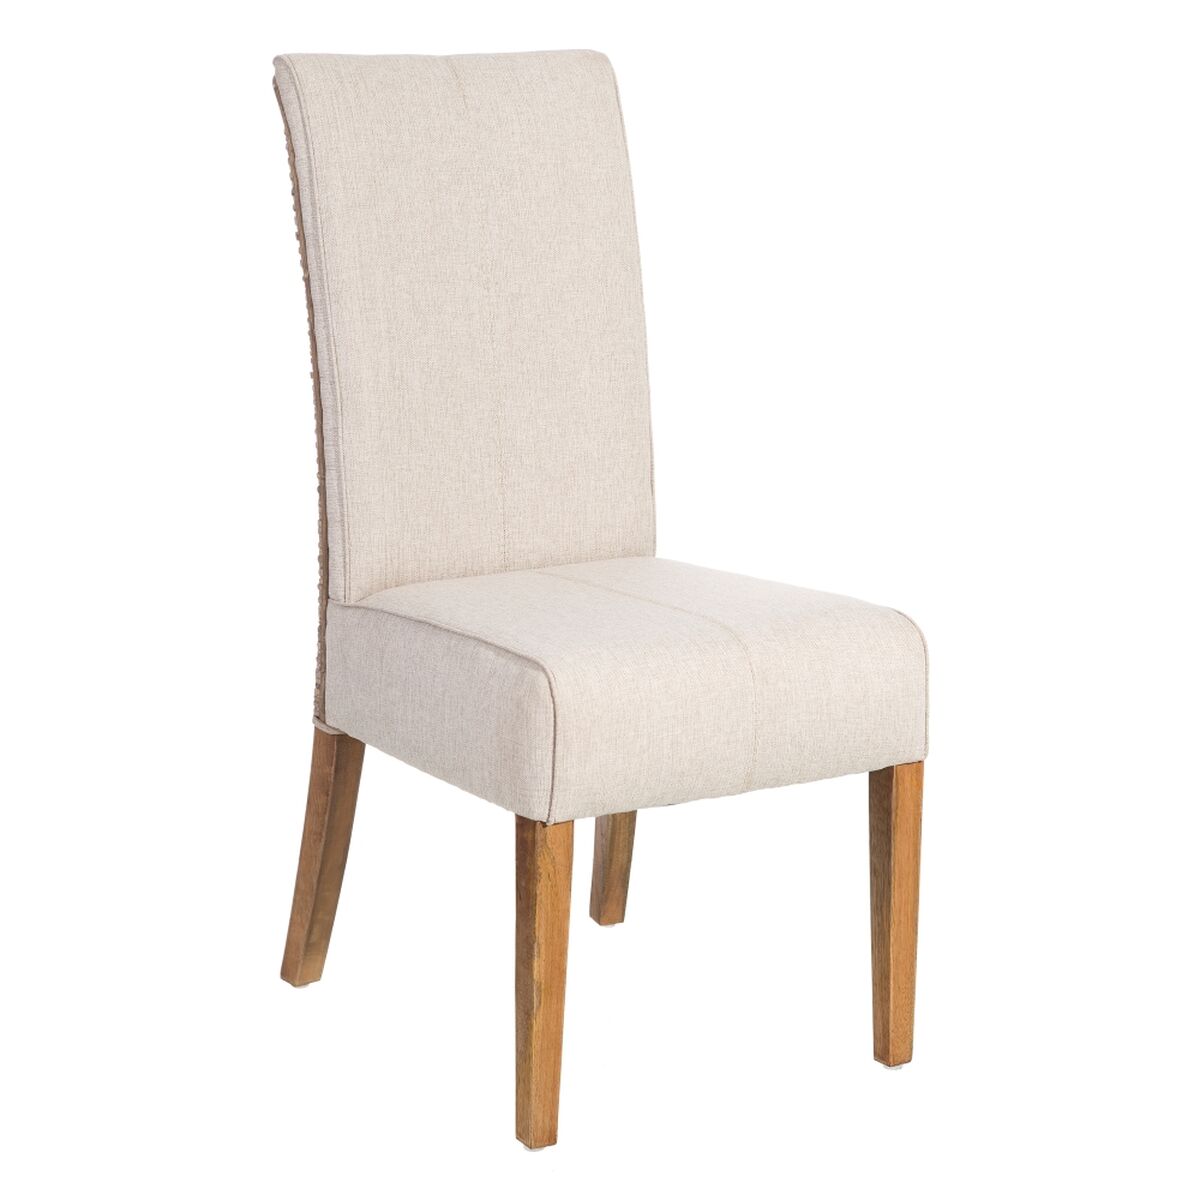 Dining Chair 46 x 62 x 100 cm Grey Beige